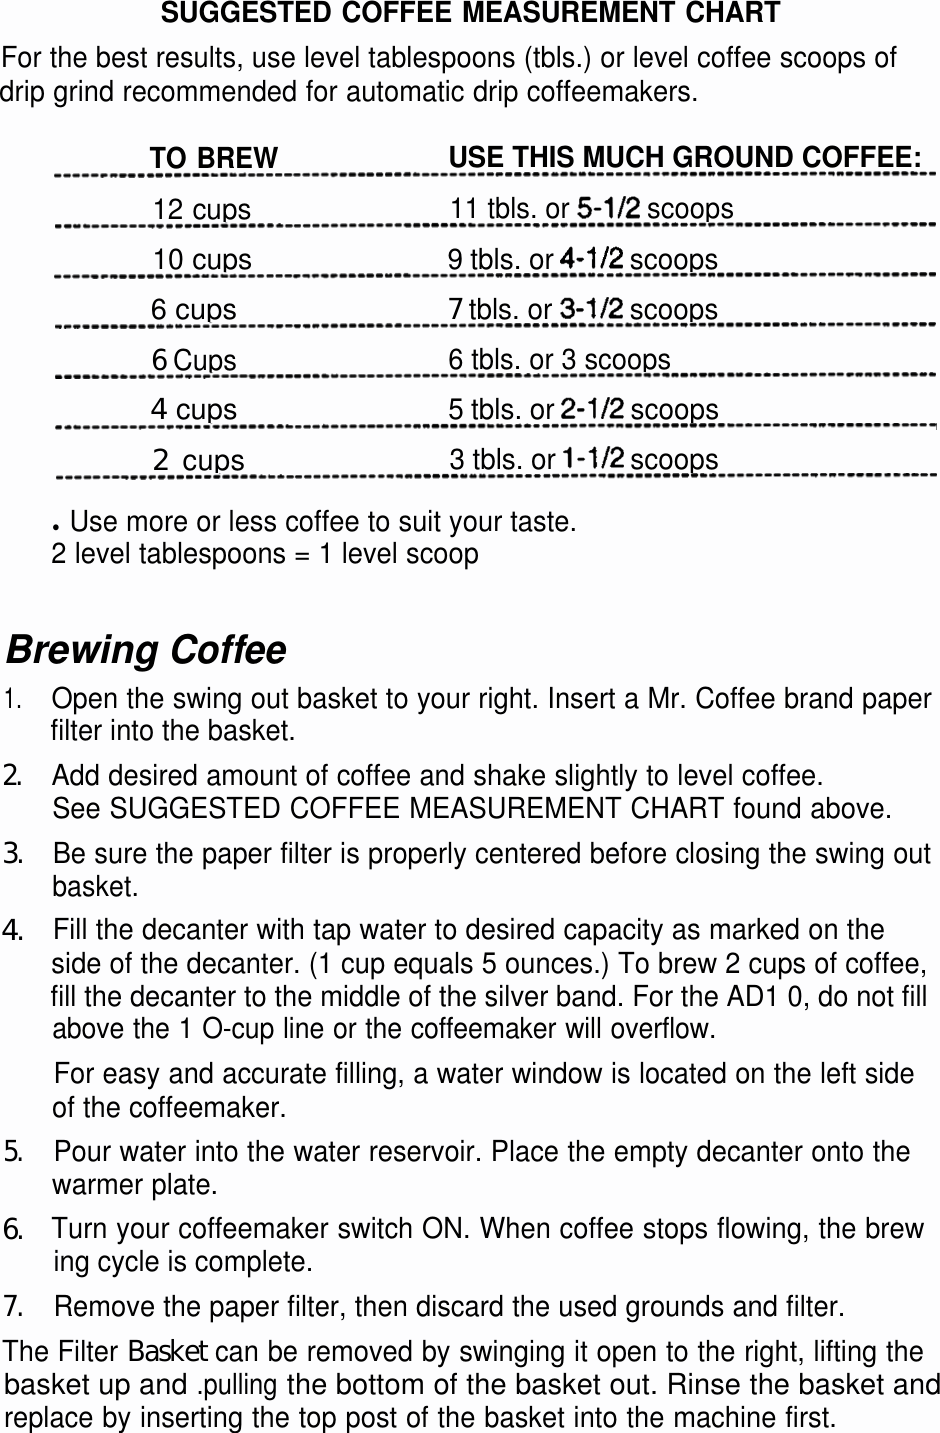 Mr Coffee Measurement Chart